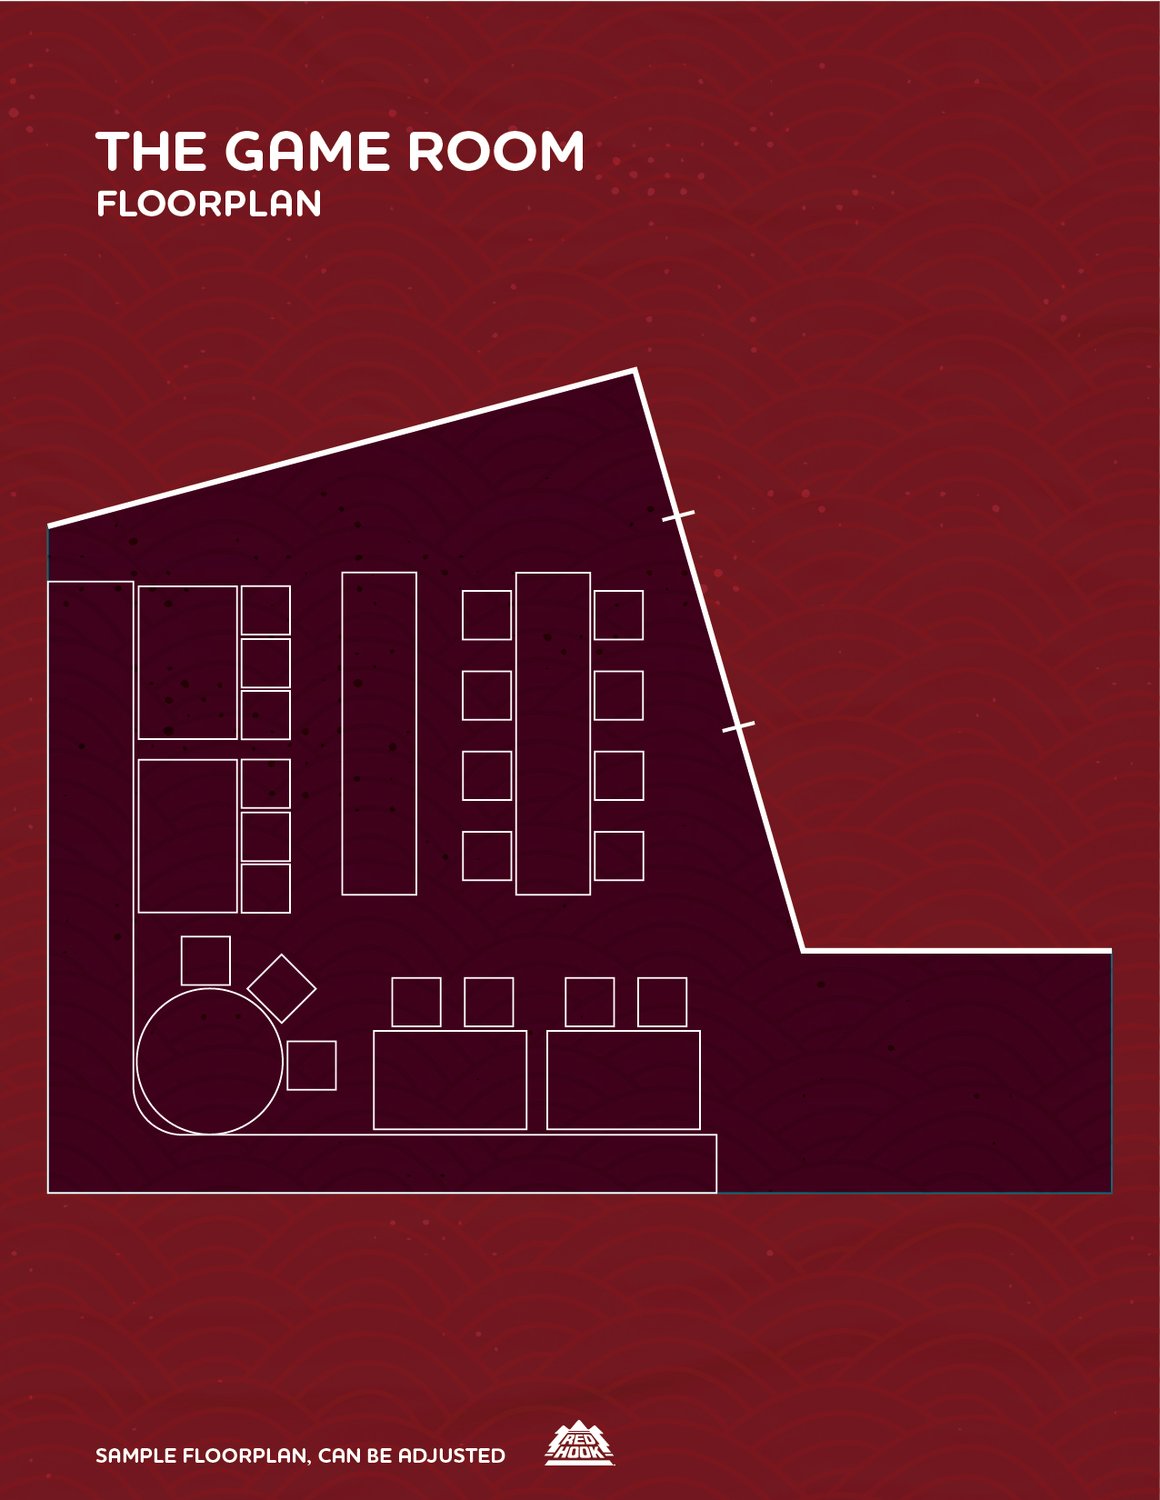 Redhooks "The Game Room" floorplan. 